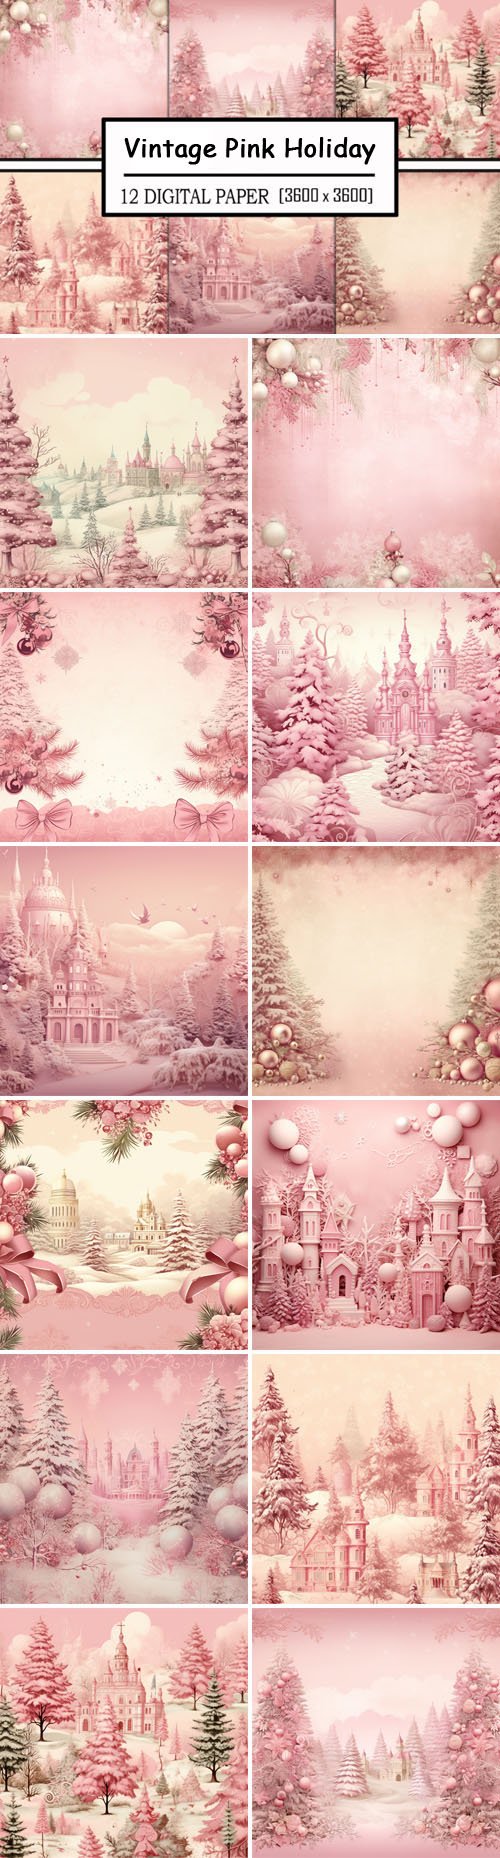 12 Vintage Pink Holiday Backgrounds Pack